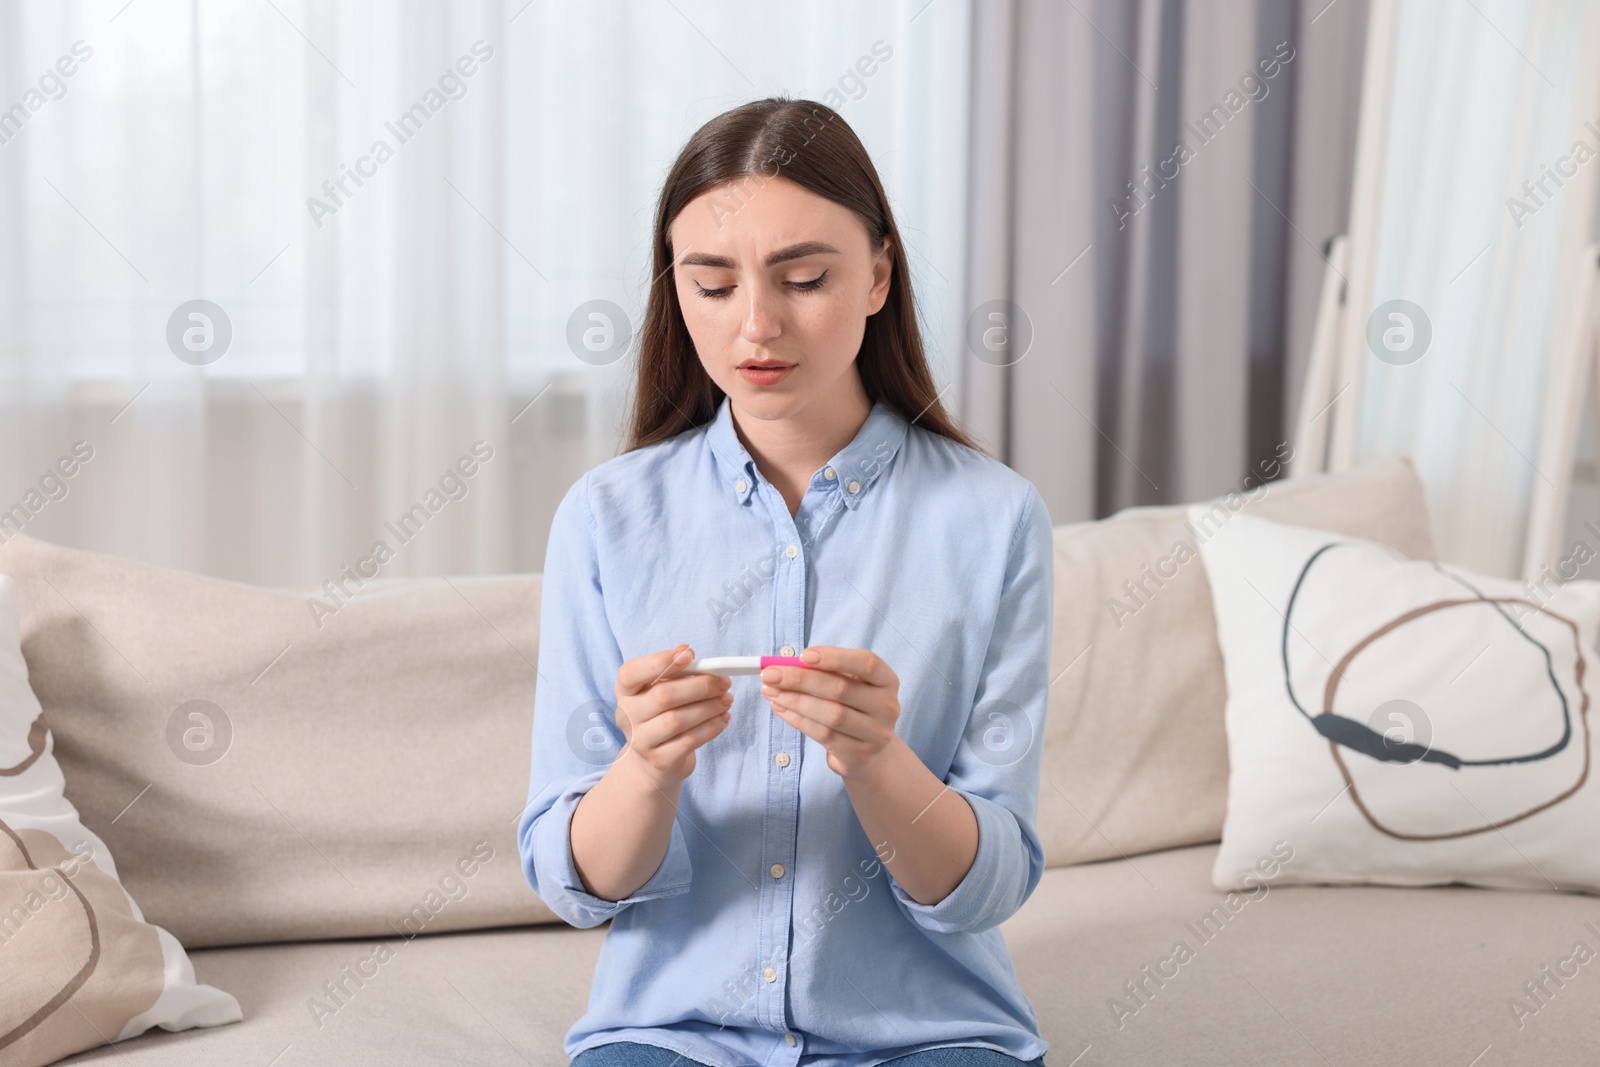 Photo of Sad woman holding pregnancy test on sofa indoors